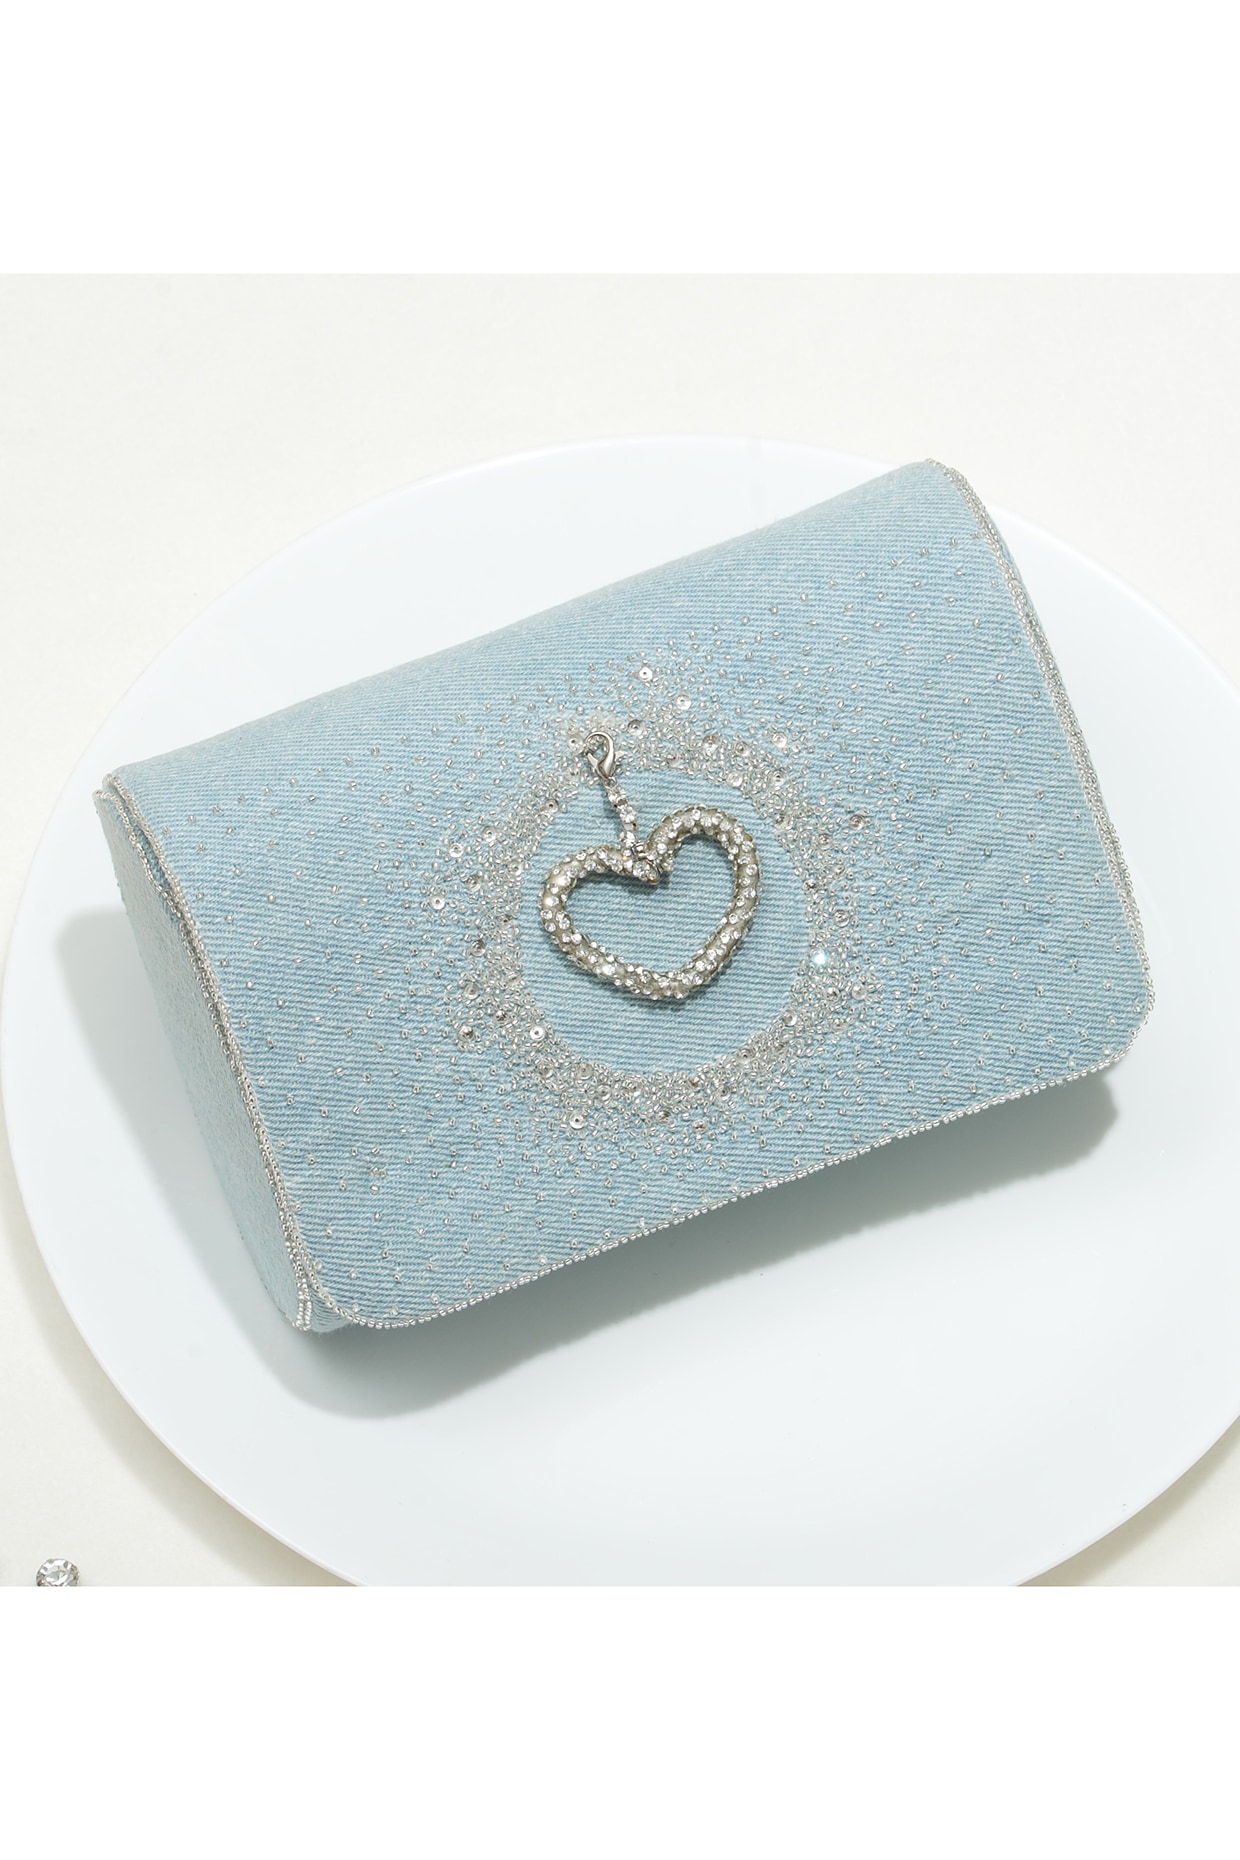 amazon.com Mansherry Evening Bag Clutch Purses for Women, Ladies Sparkling  Party Handbag Wedding Bag Purse Blue: Handbags: Amazon.com | ShopLook